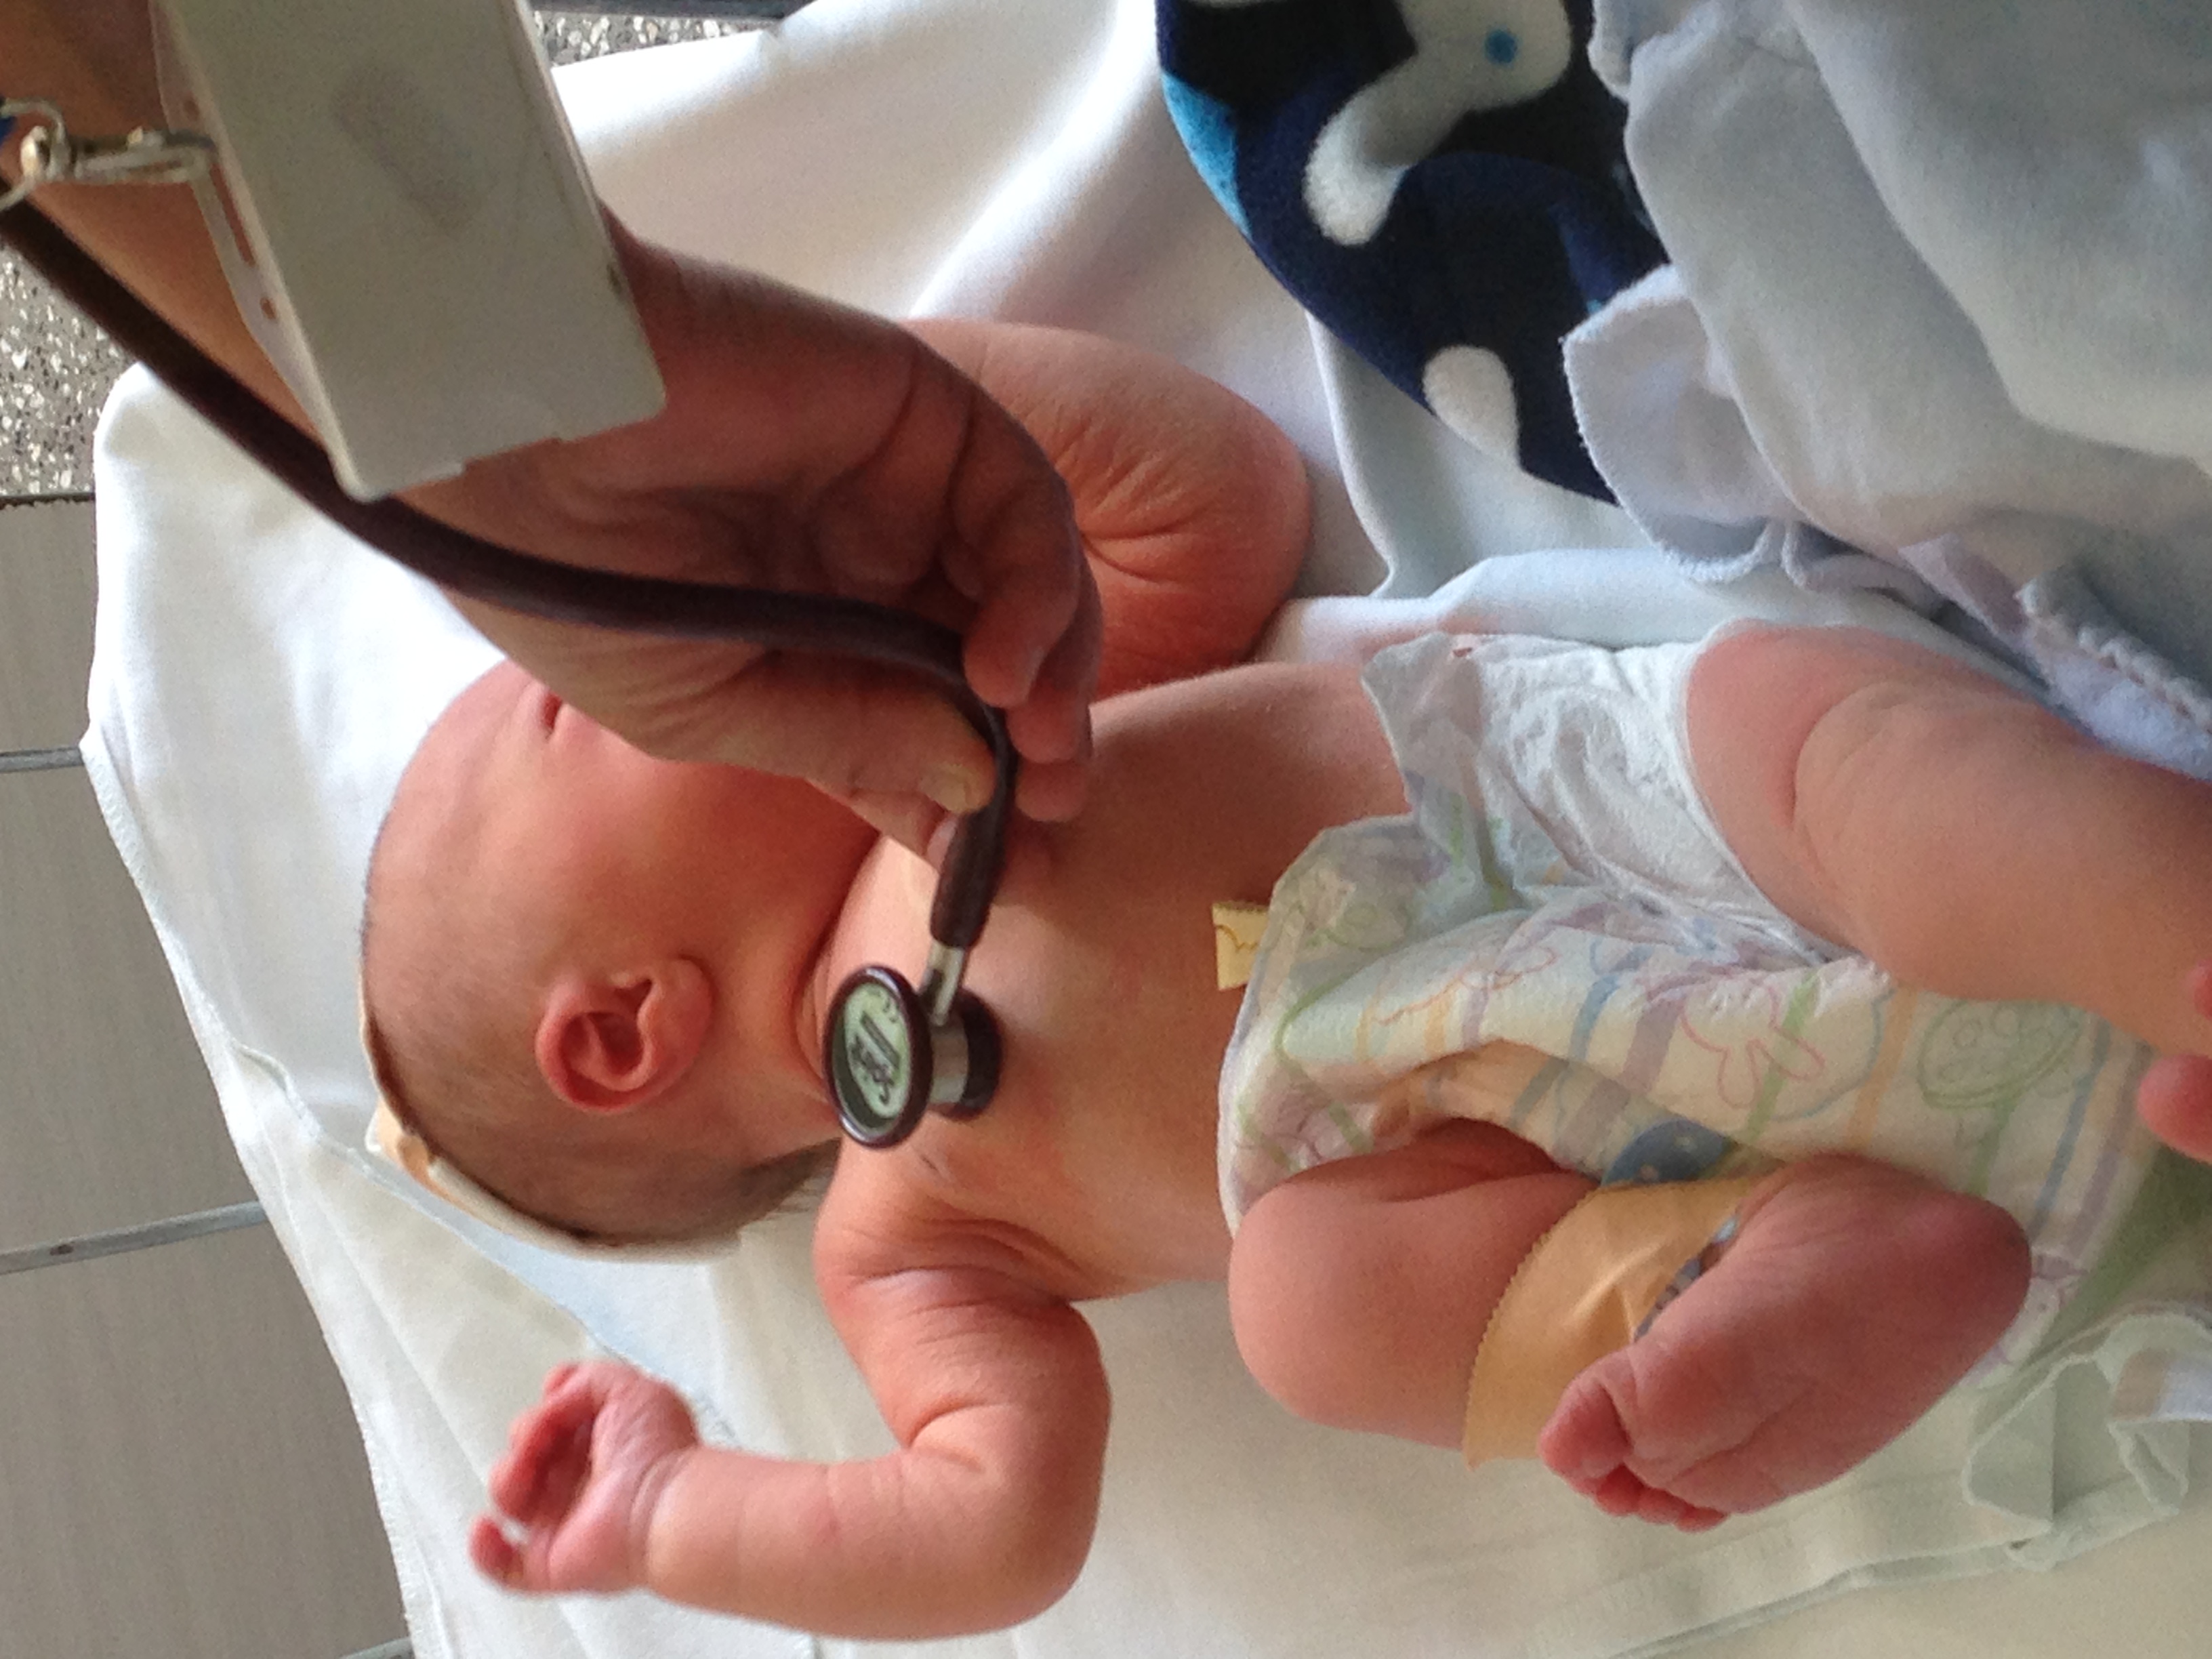 Baby-Dimitar-doctor-checks-heart